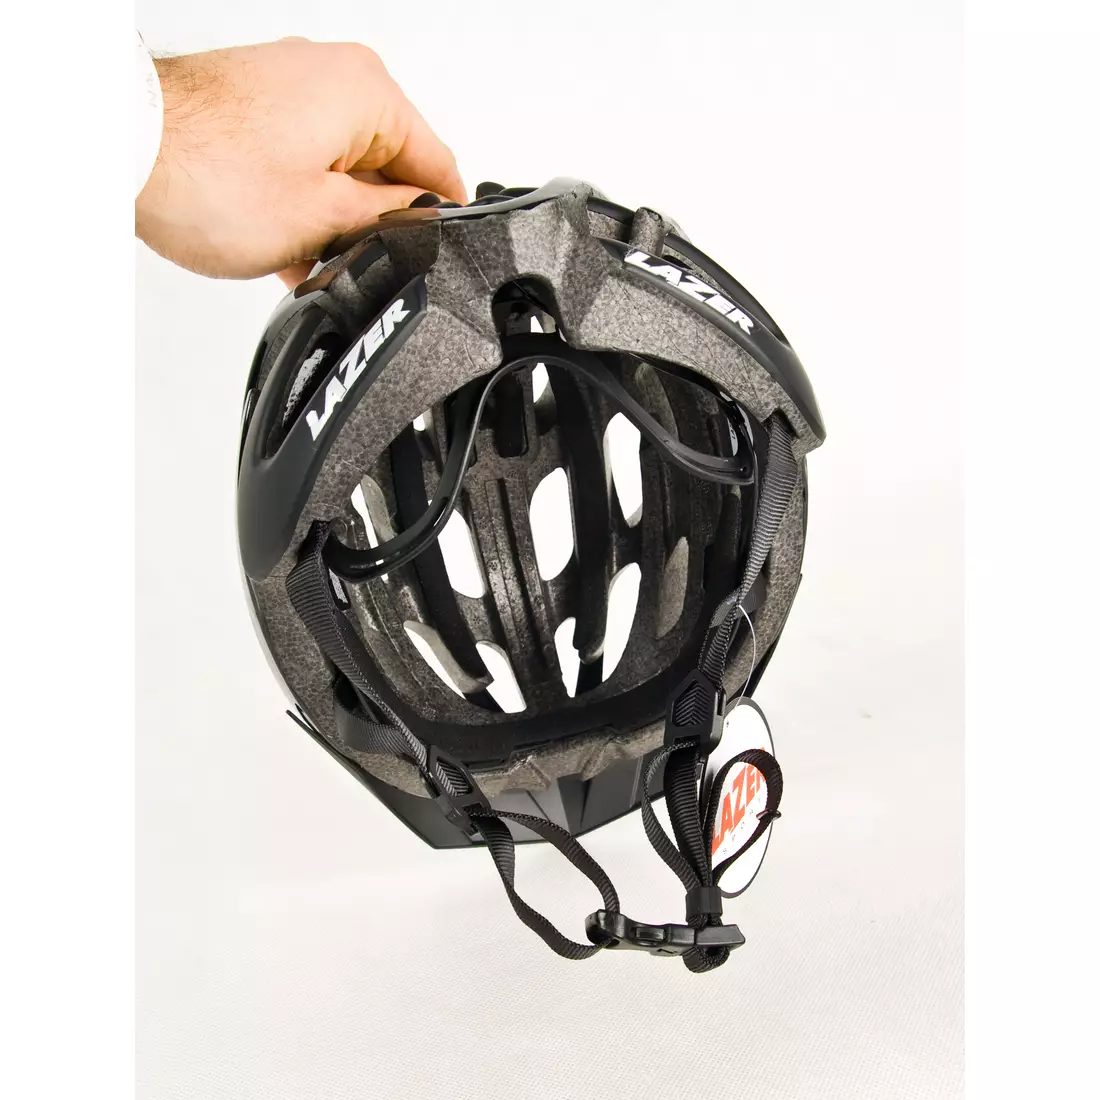 LAZER MAGMA MTB bicycle helmet, matt black